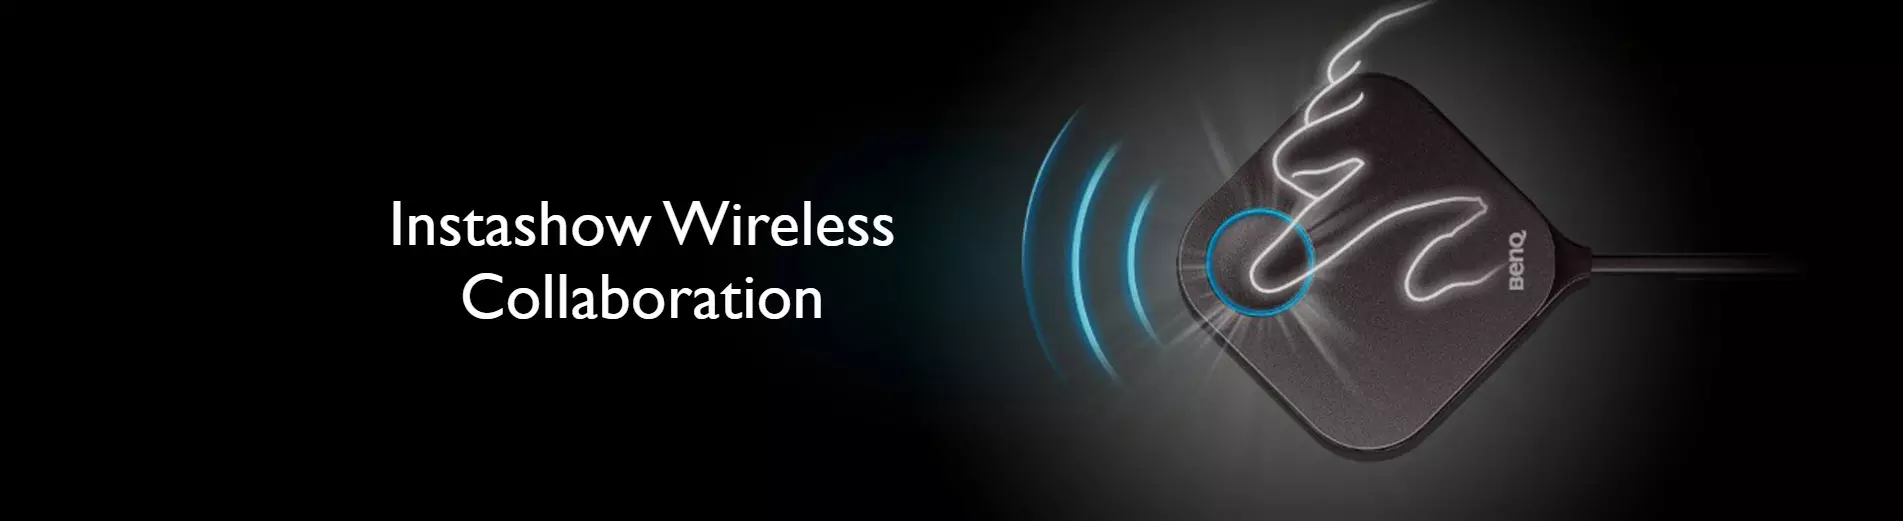 BenQ Instashow Wireless Collaboration